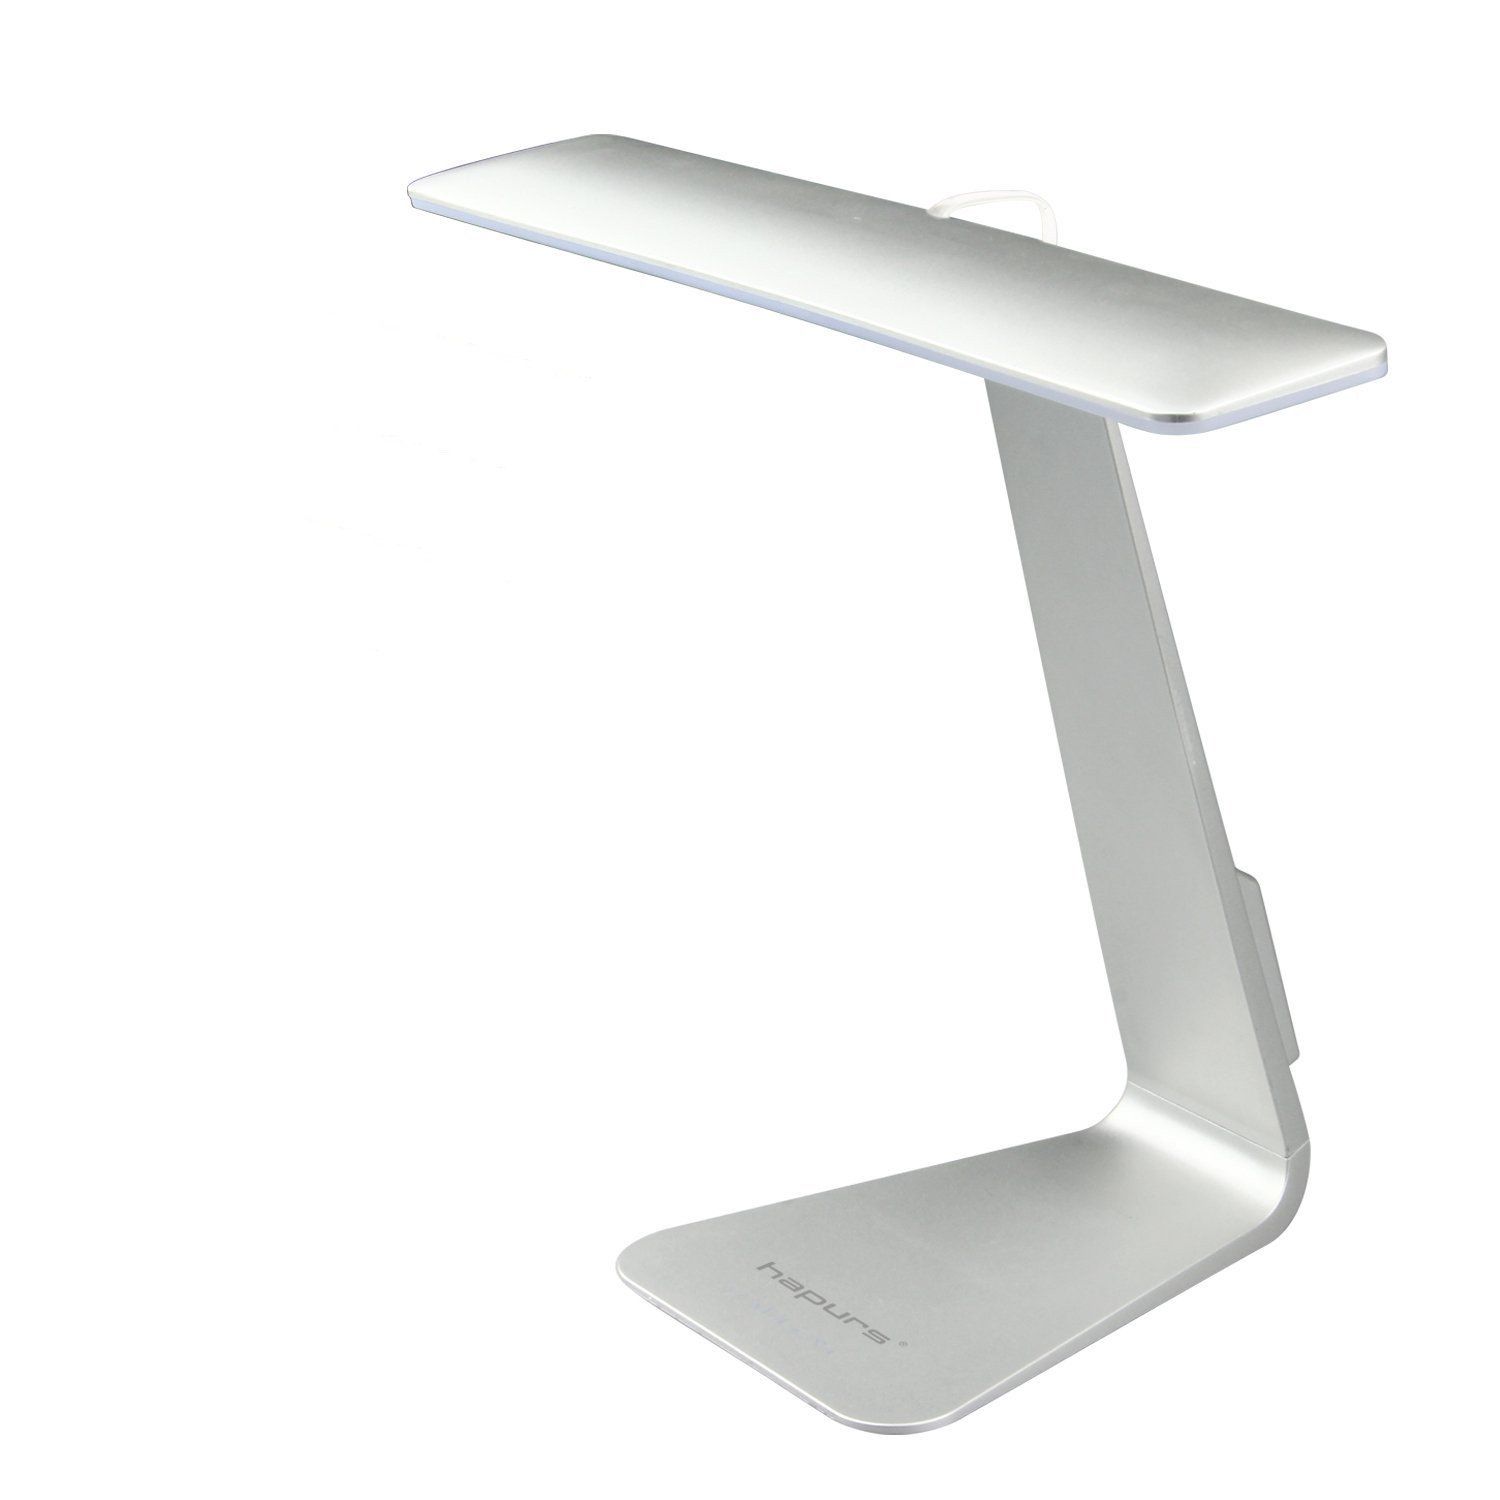 LED Desk Lamp, Hapurs Touch Sensitive Controller LED USB Dimmable ...